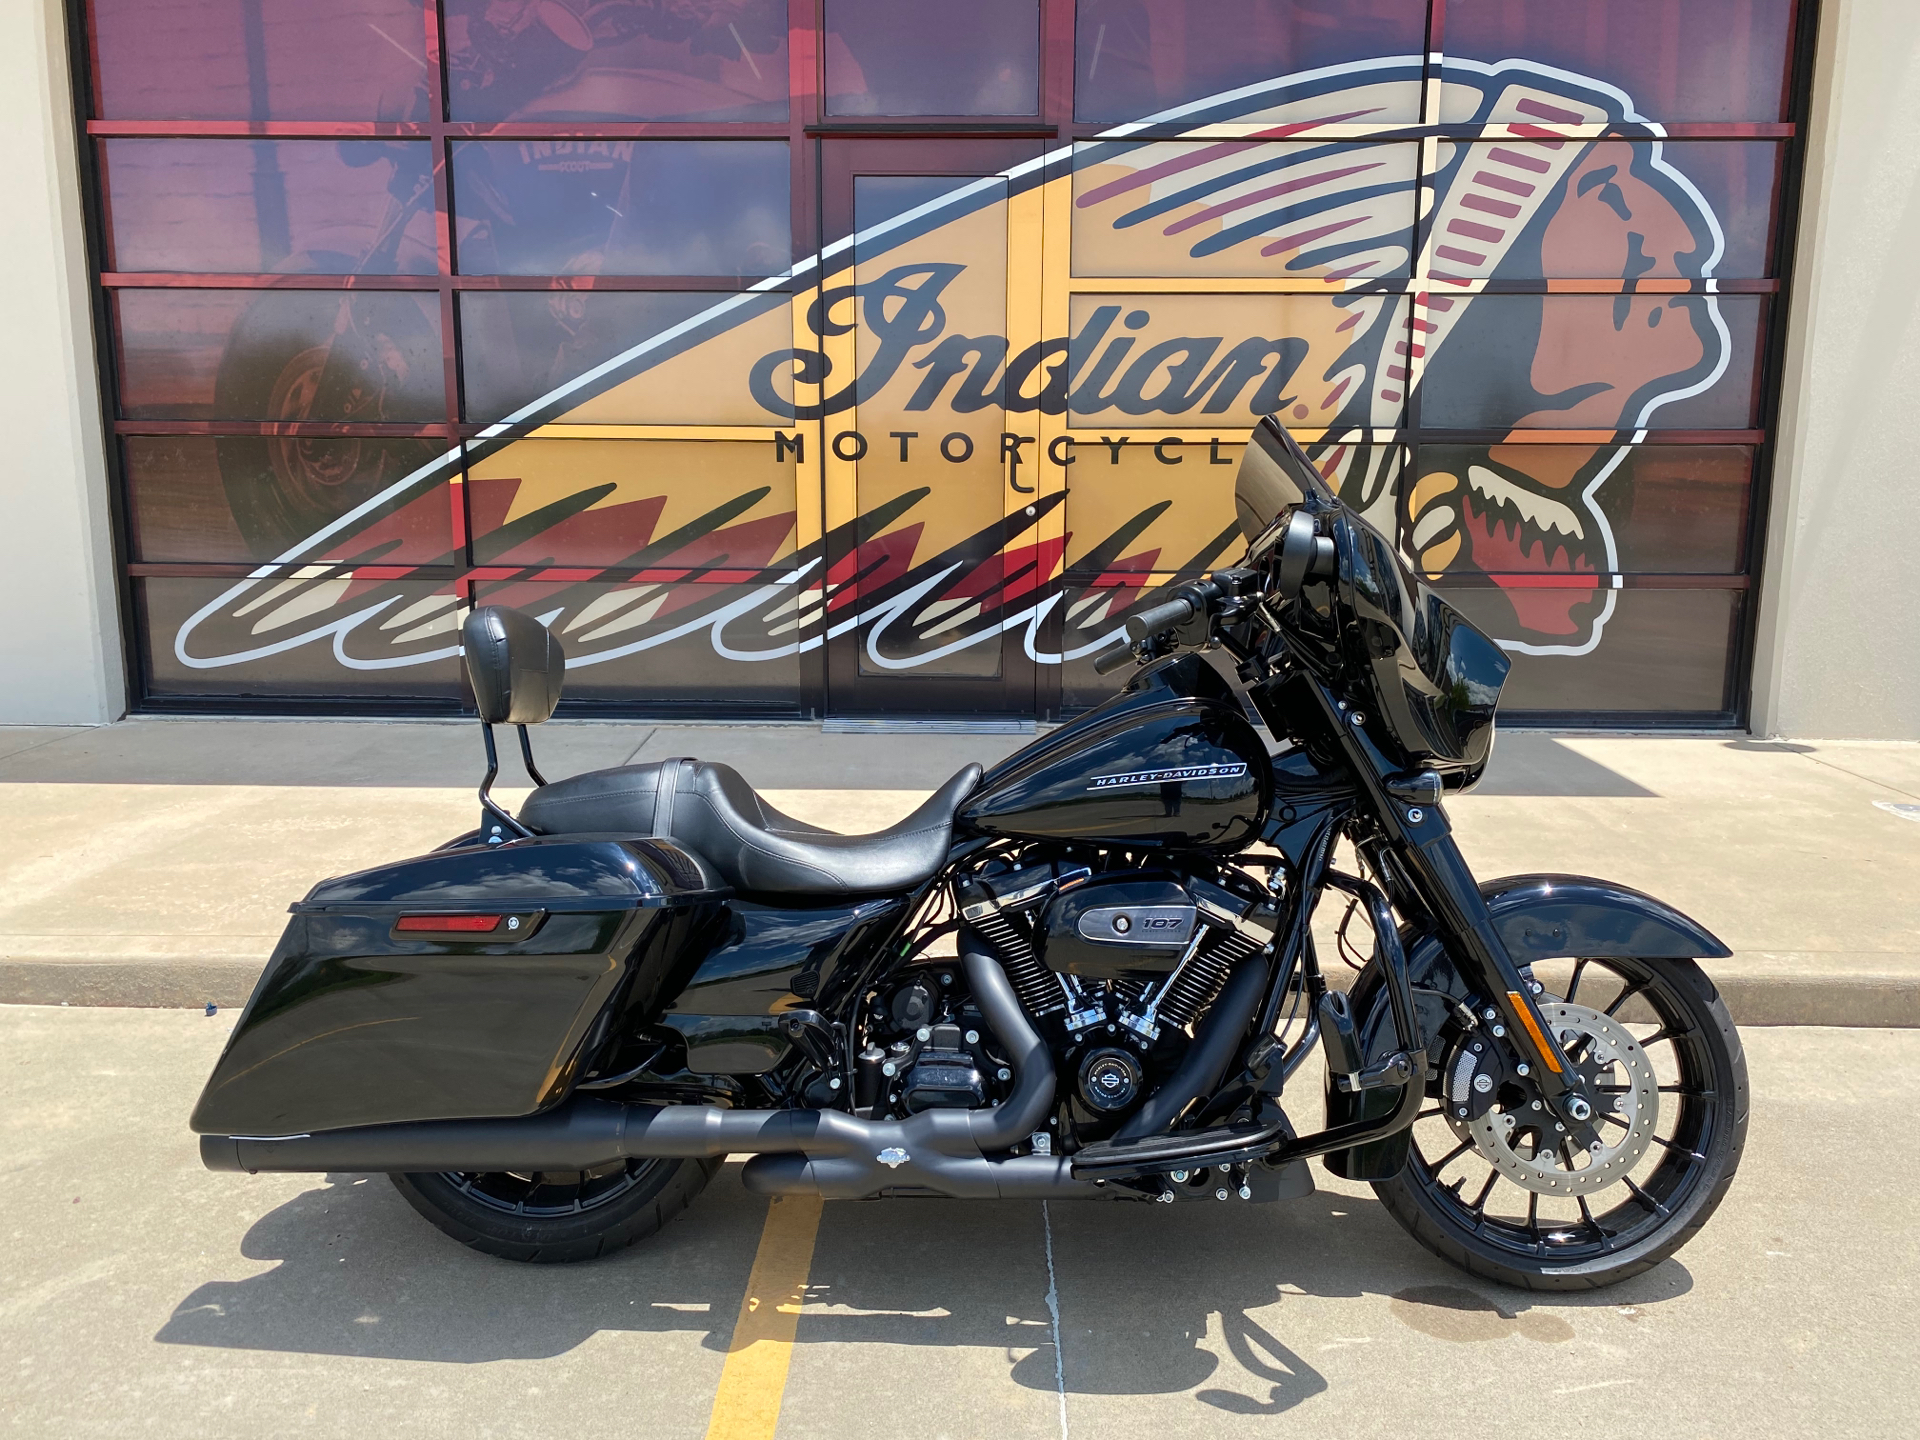 2018 Harley Davidson Street Glide Special Motorcycles Norman Oklahoma 610256